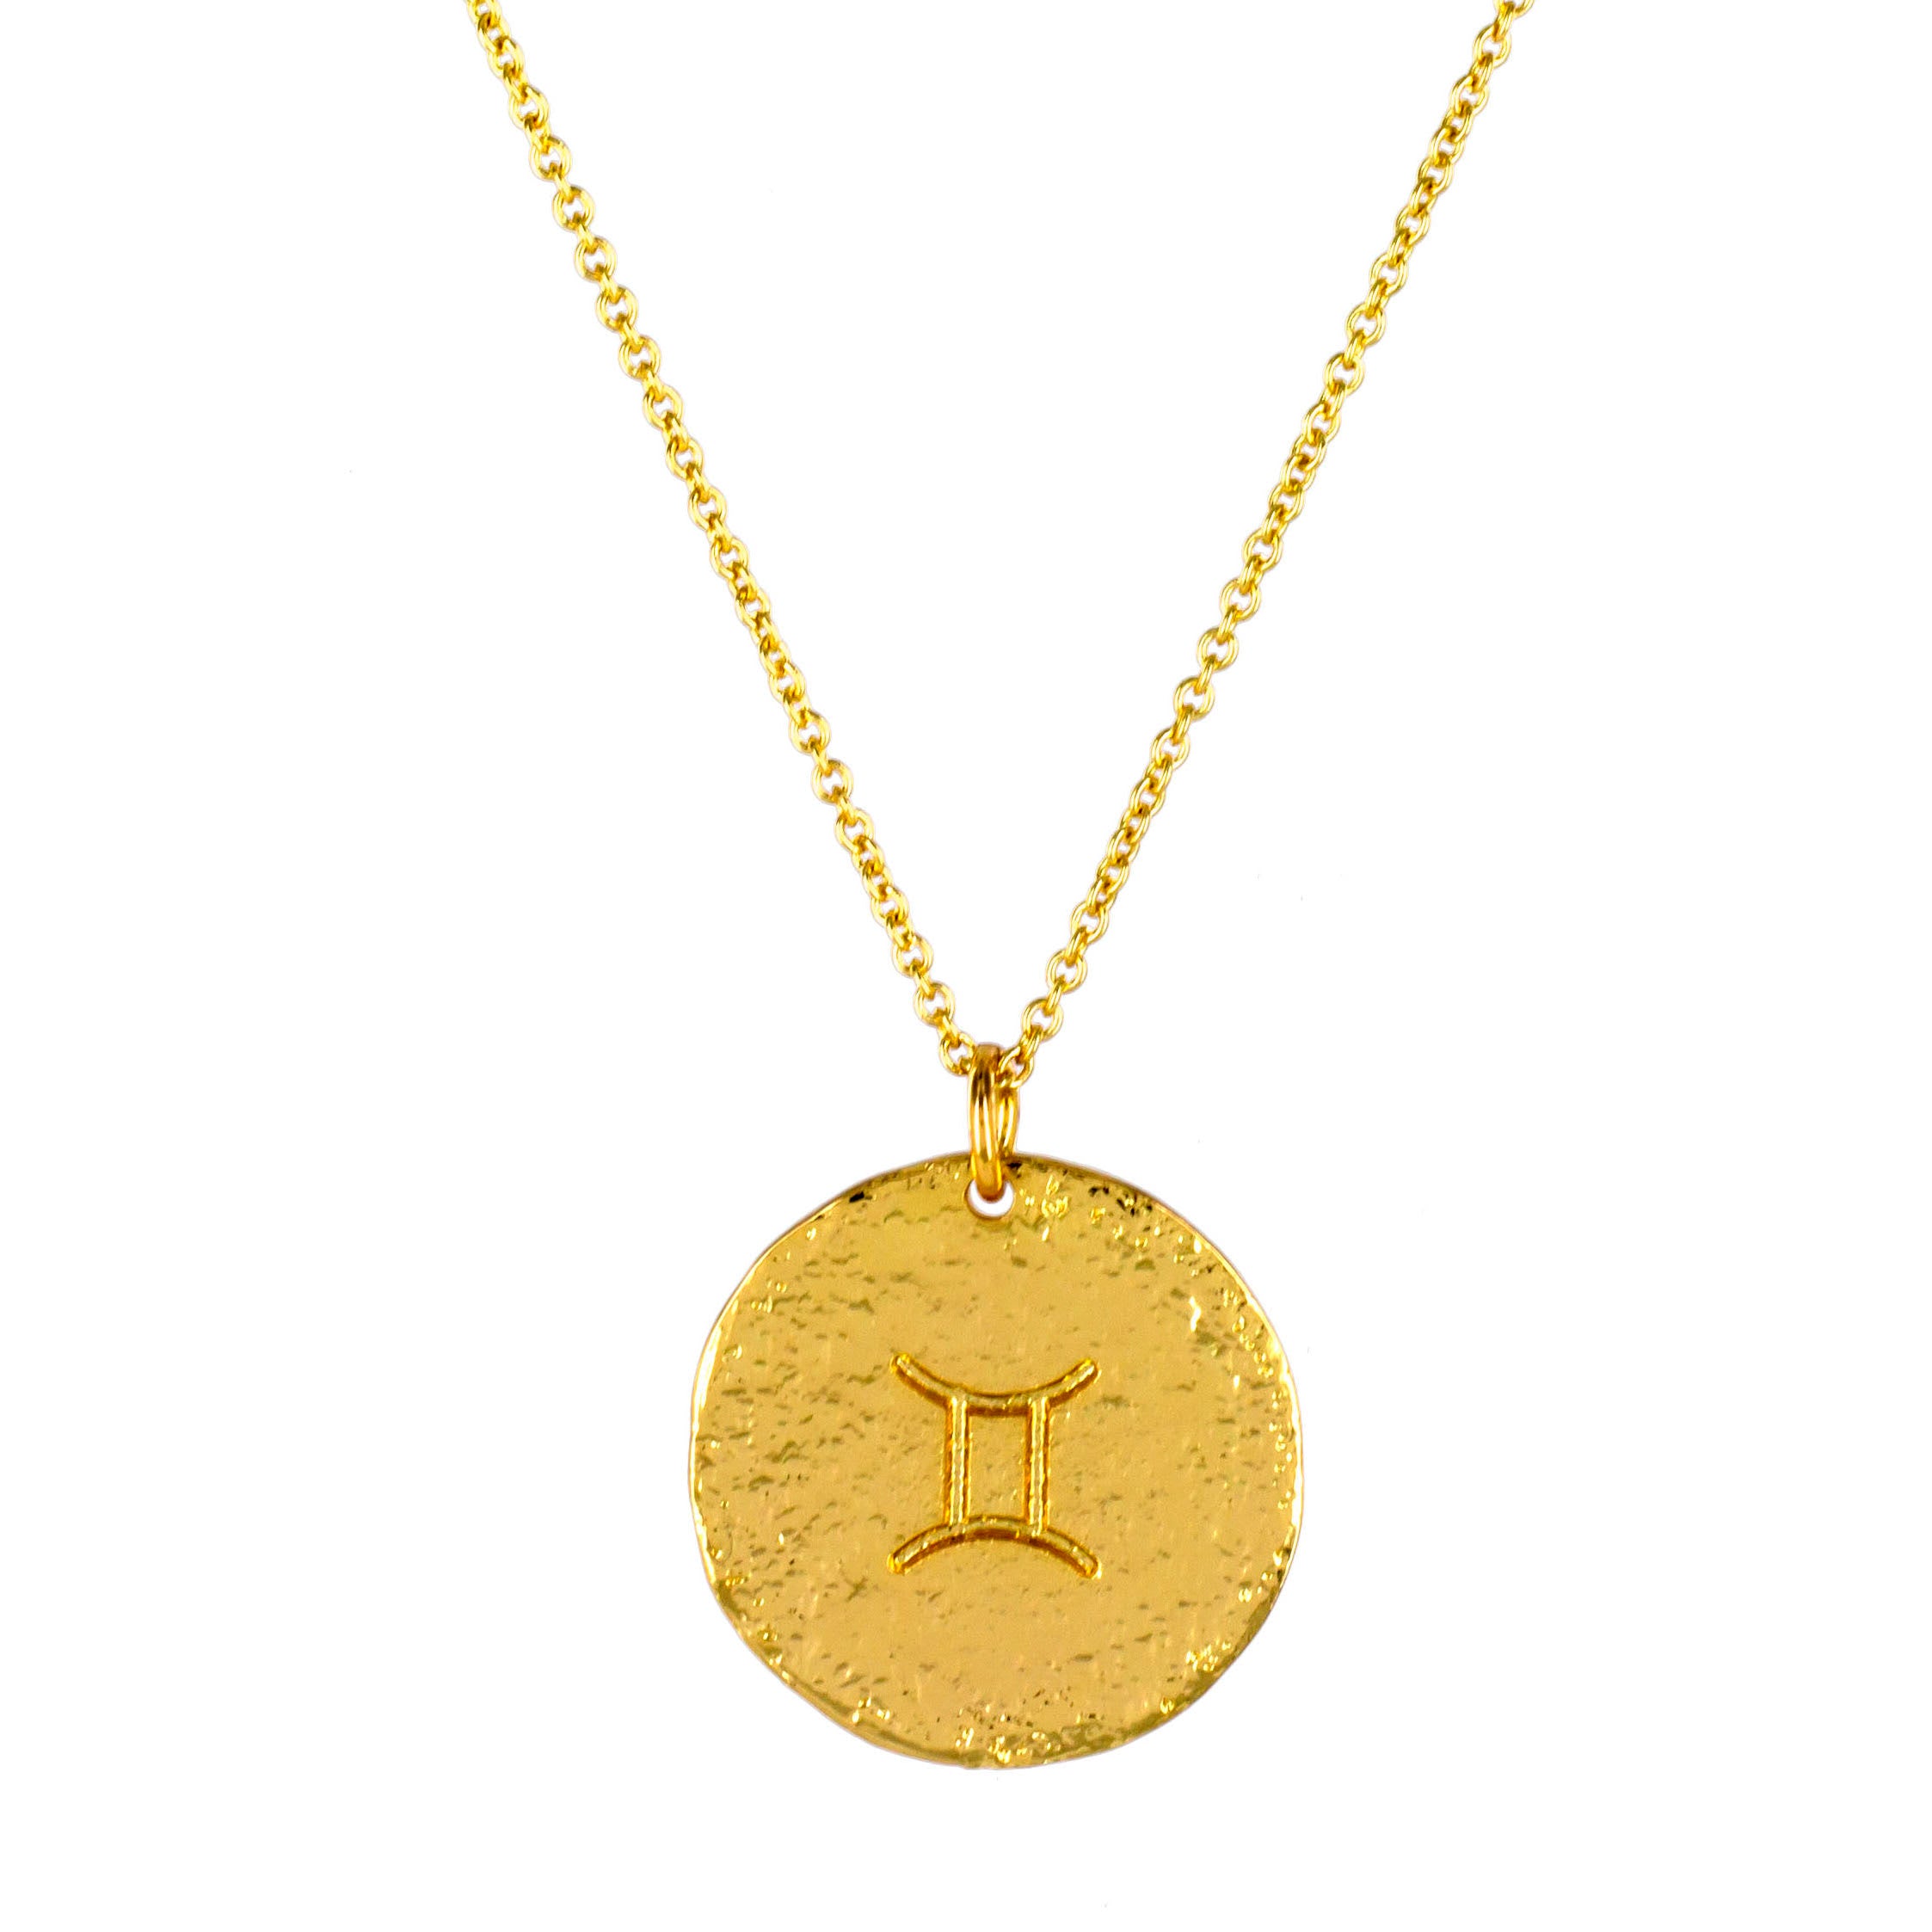 astrologie collier gemeaux- astrodisiac - bijoux - paris - claire naa - jewels - necklace gemini - astrology